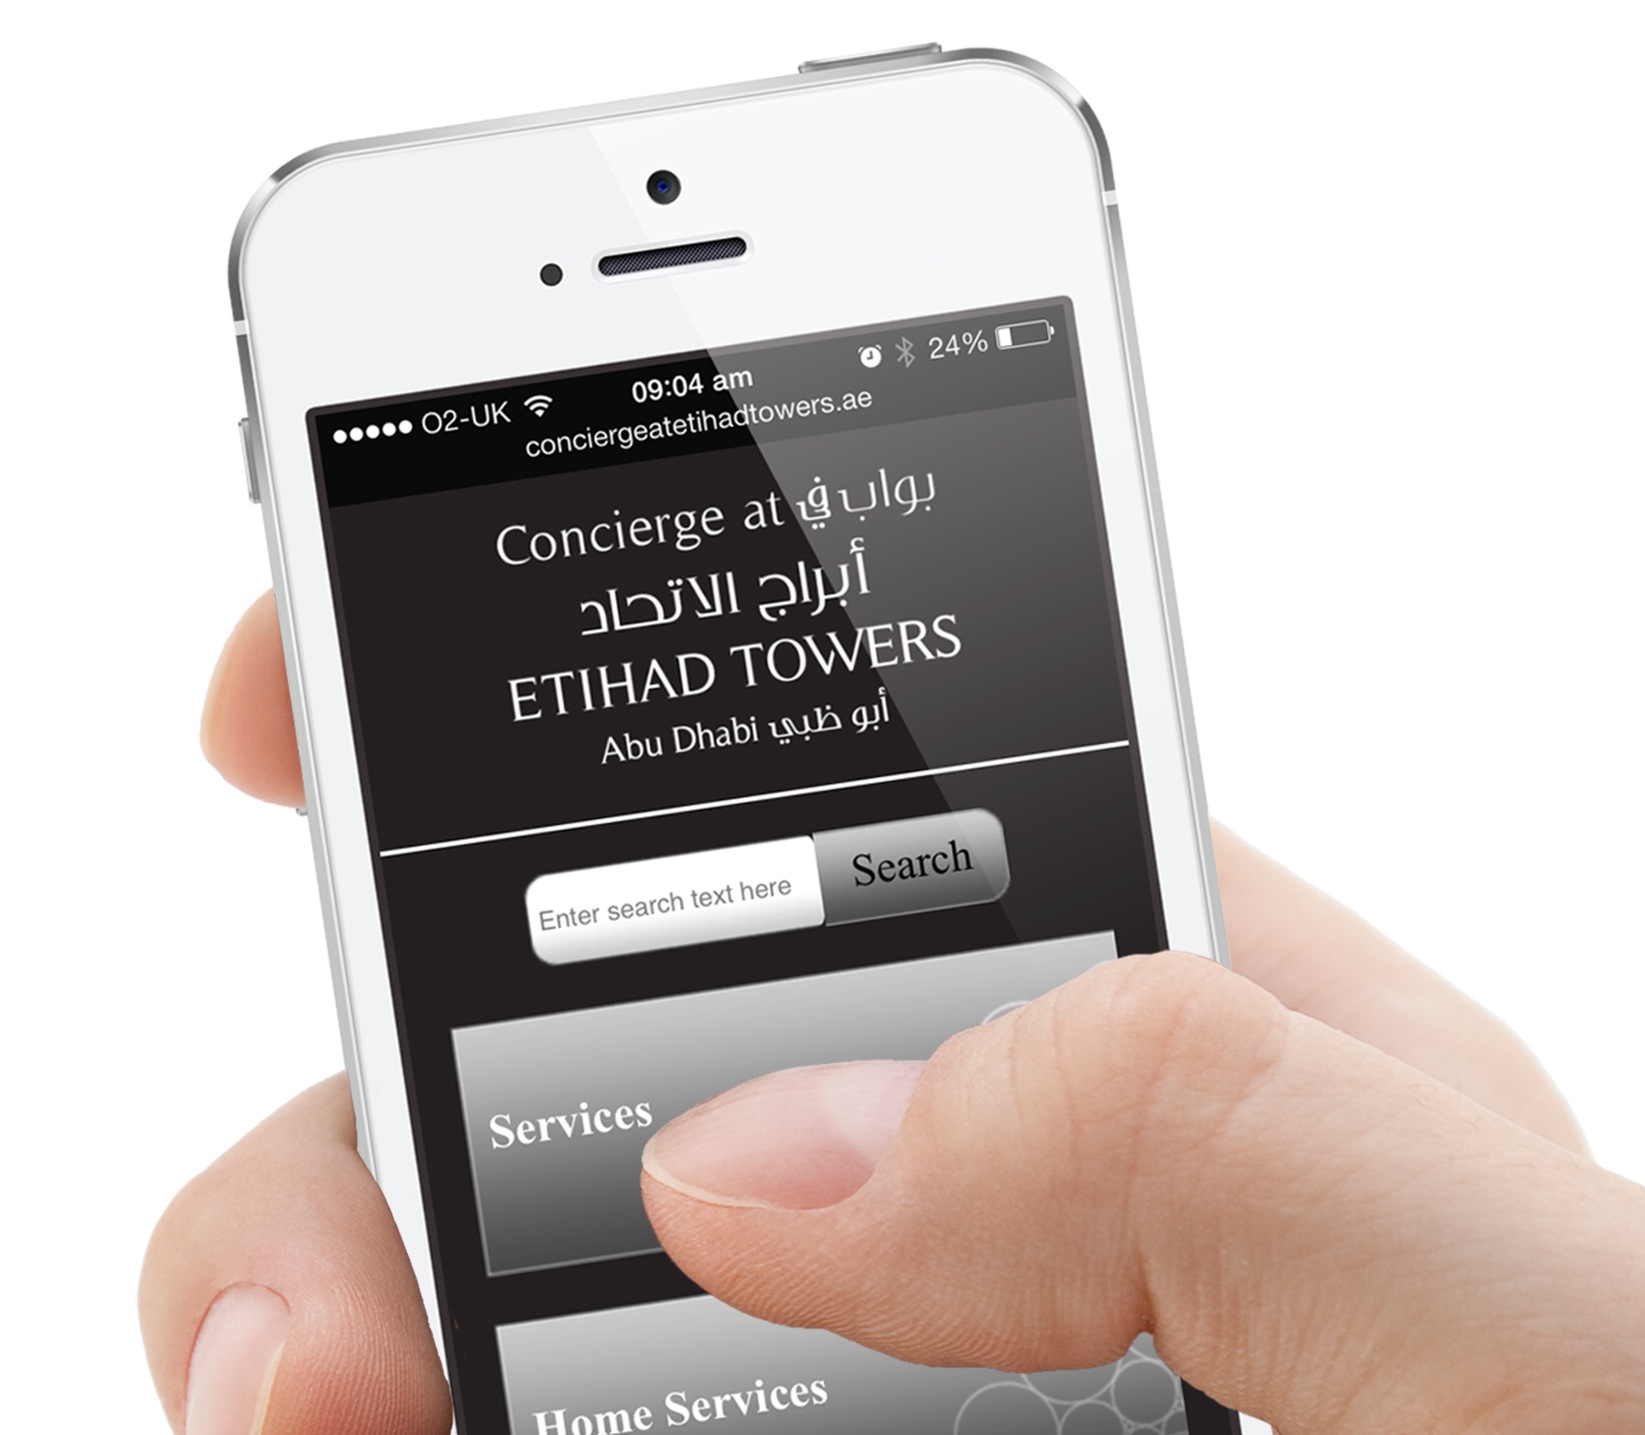 Etihad Towers Abu Dhabi Launches Concierge App - Gulf Business1645 x 1435